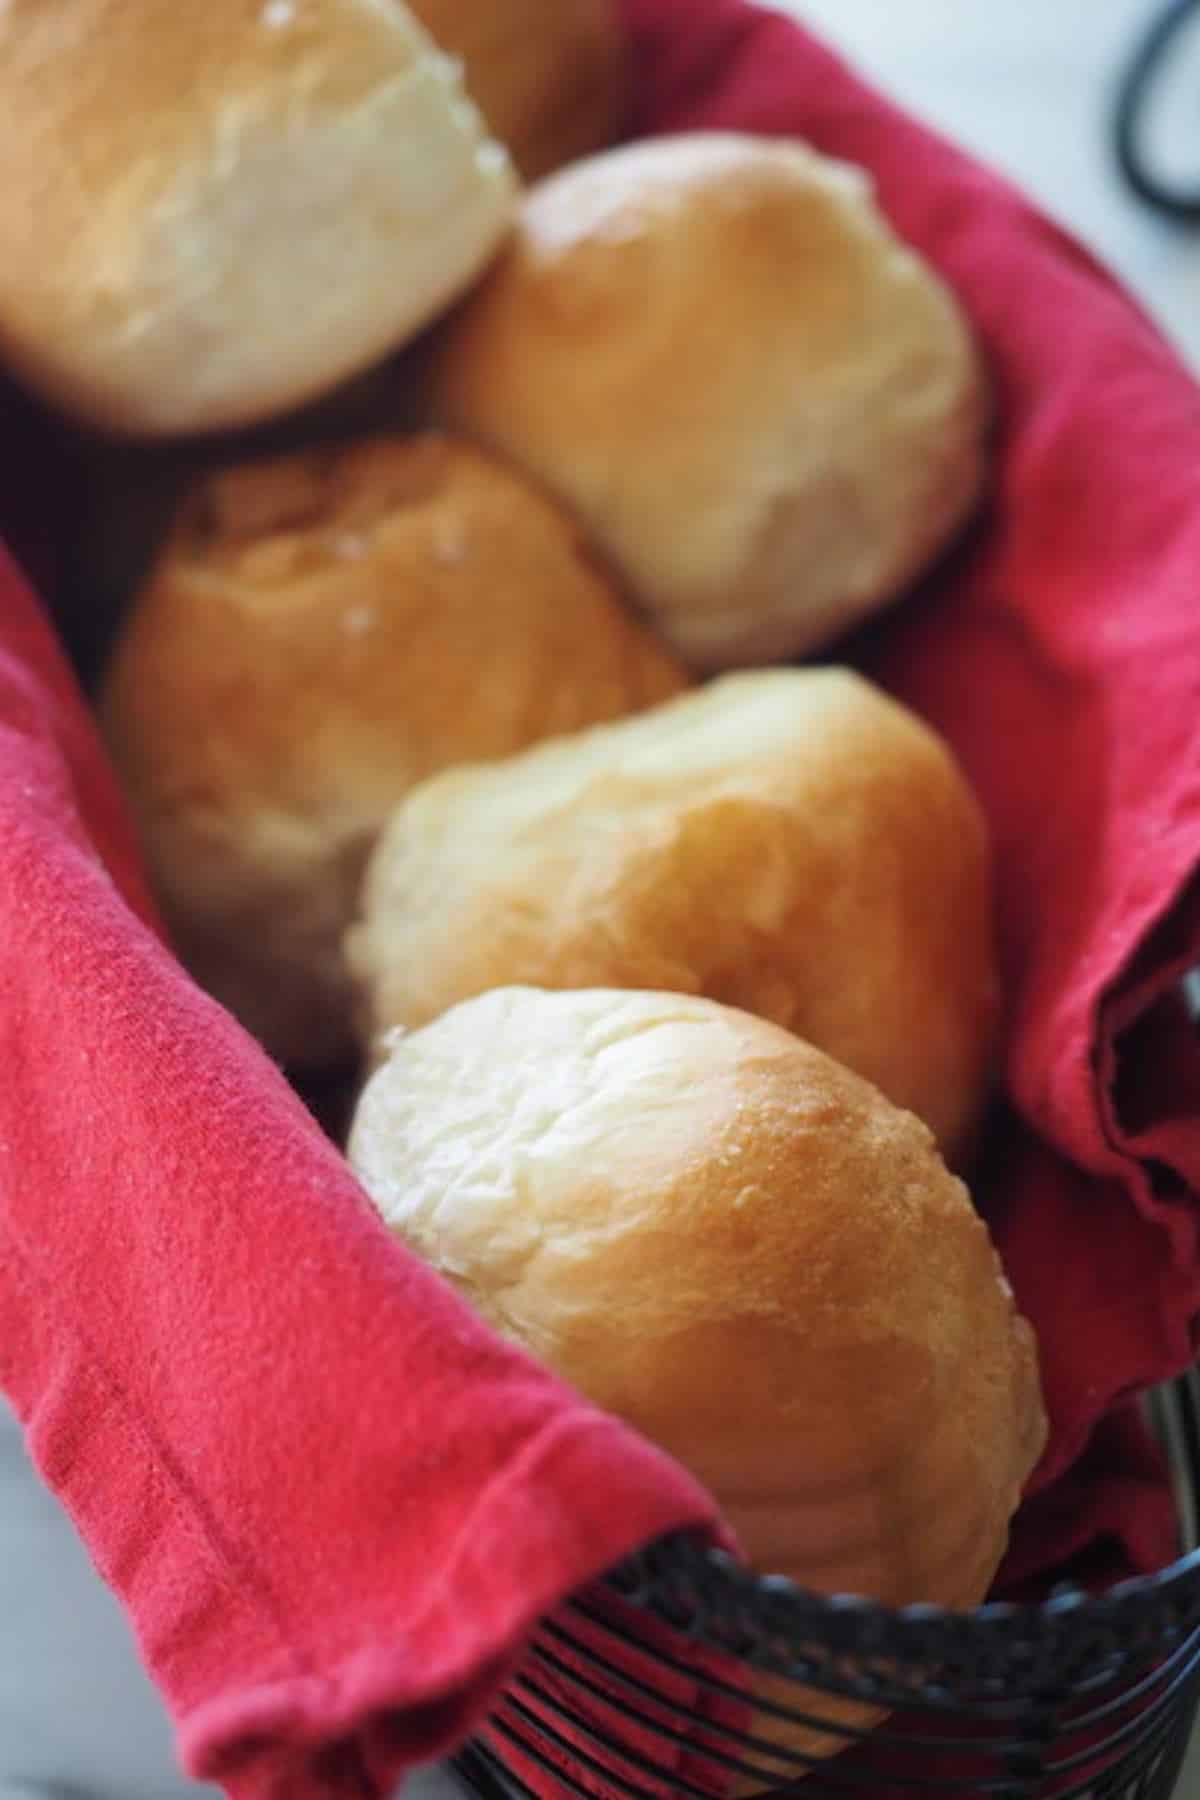 Soft bread machine rolls in a basket. 